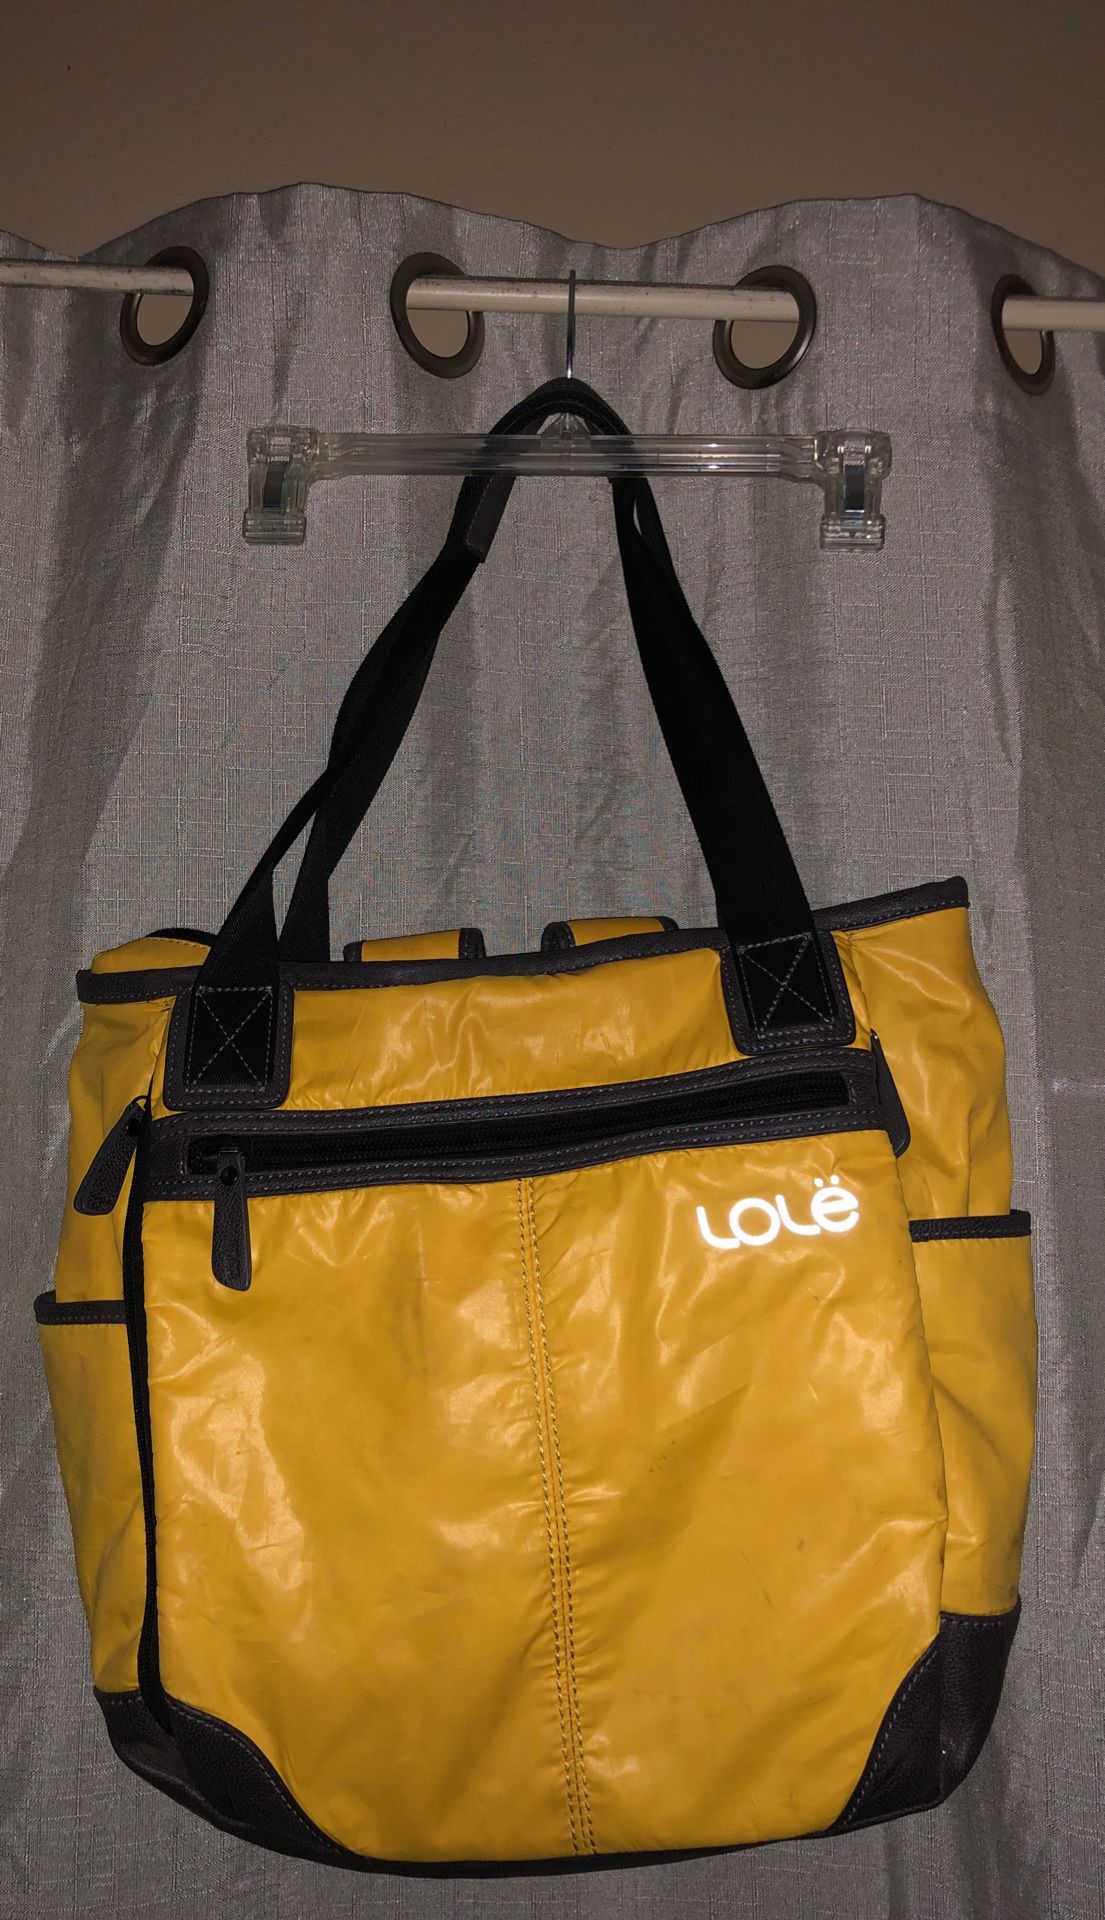 LoLe bag/backpack